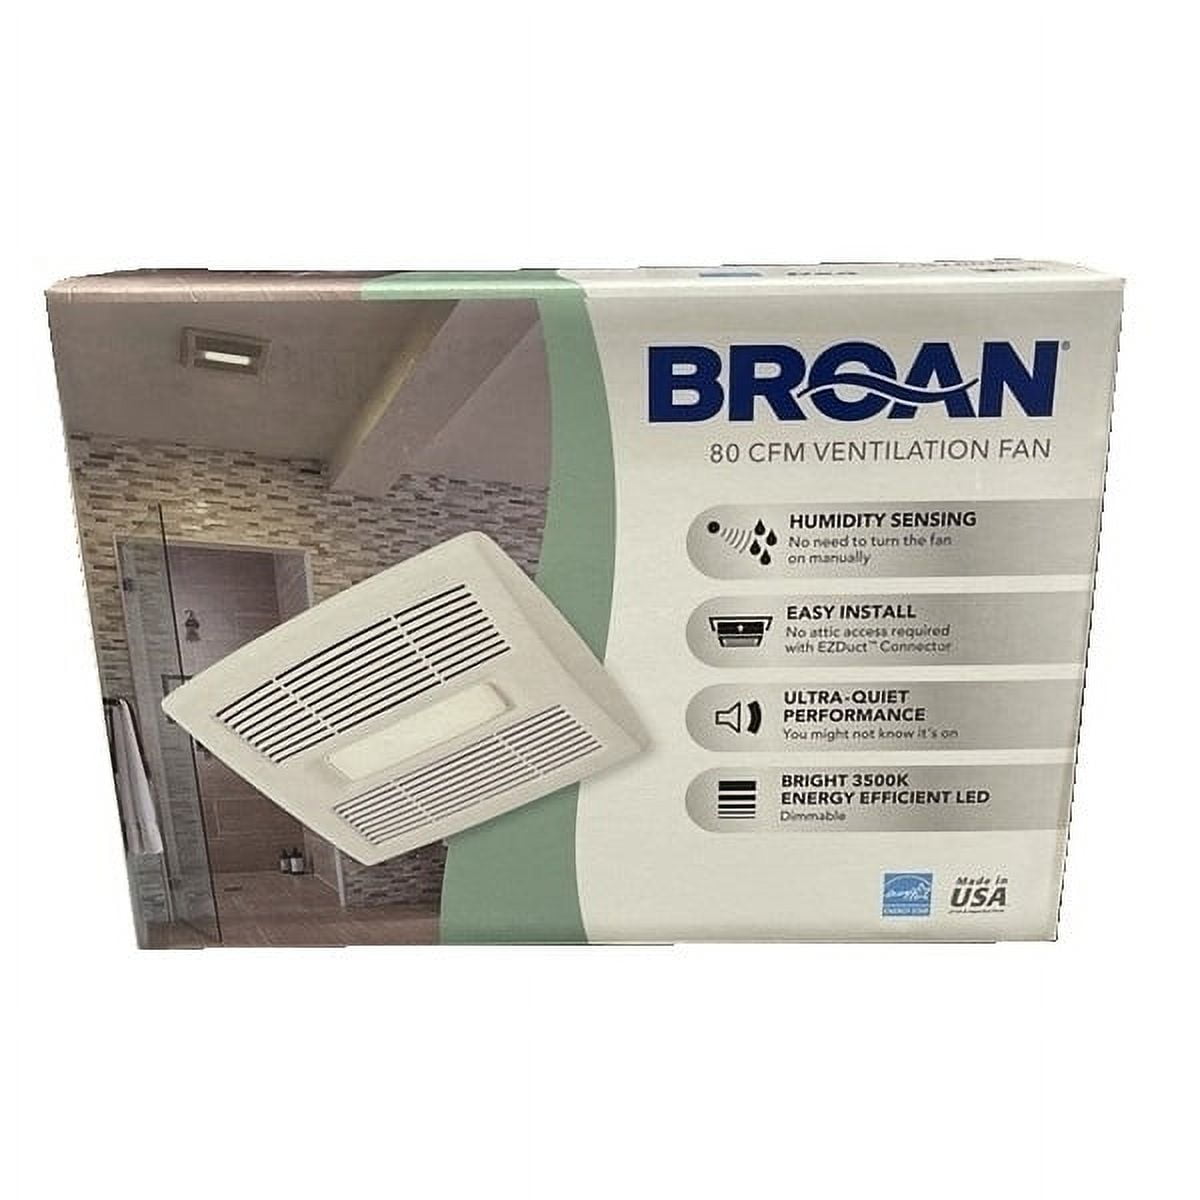 Broan Humidity Sensing Bath Ventilation Fan with LED Light